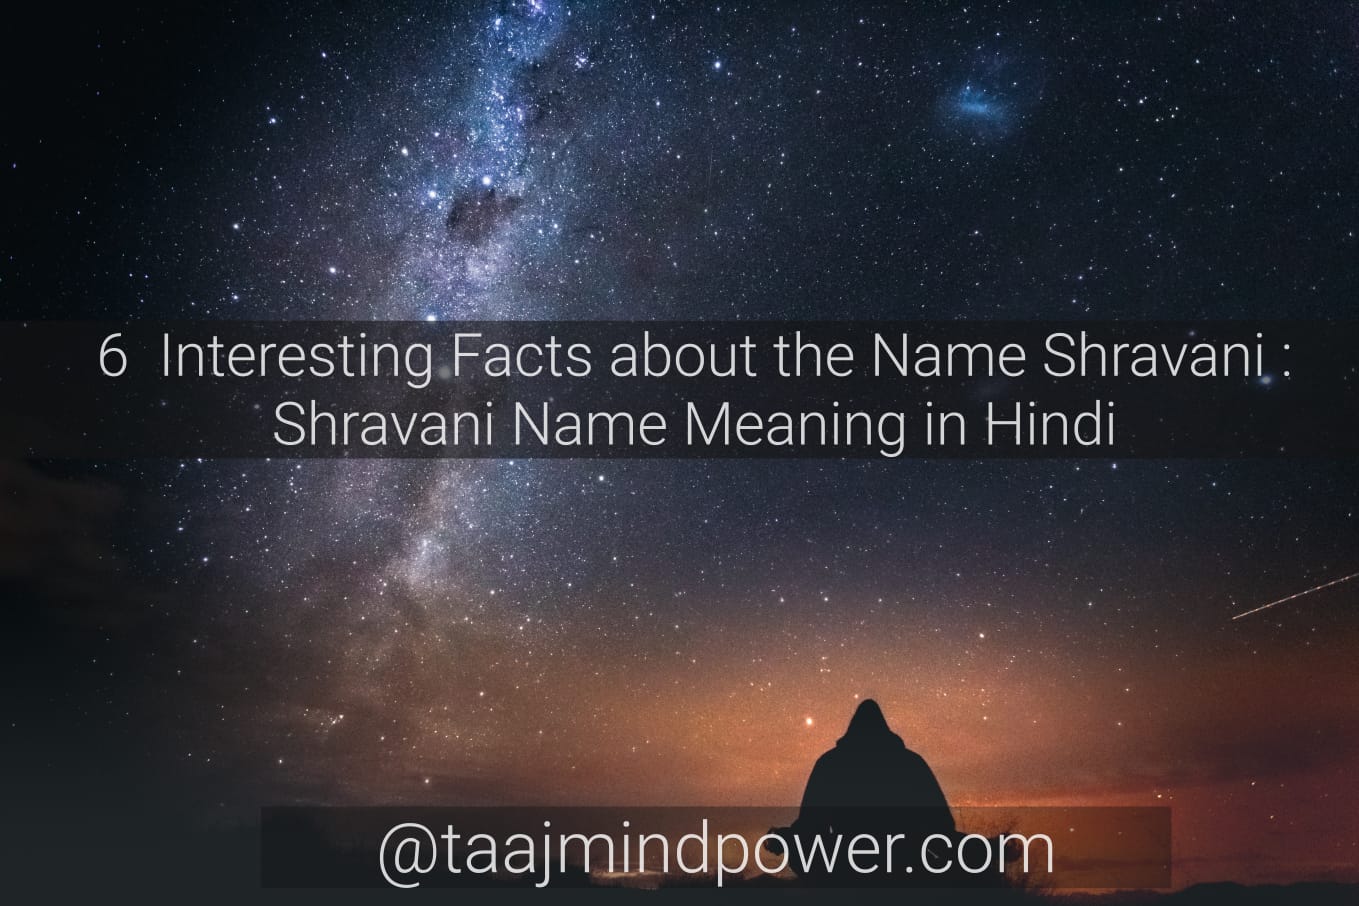 Shravani Name Meaning in Hindi